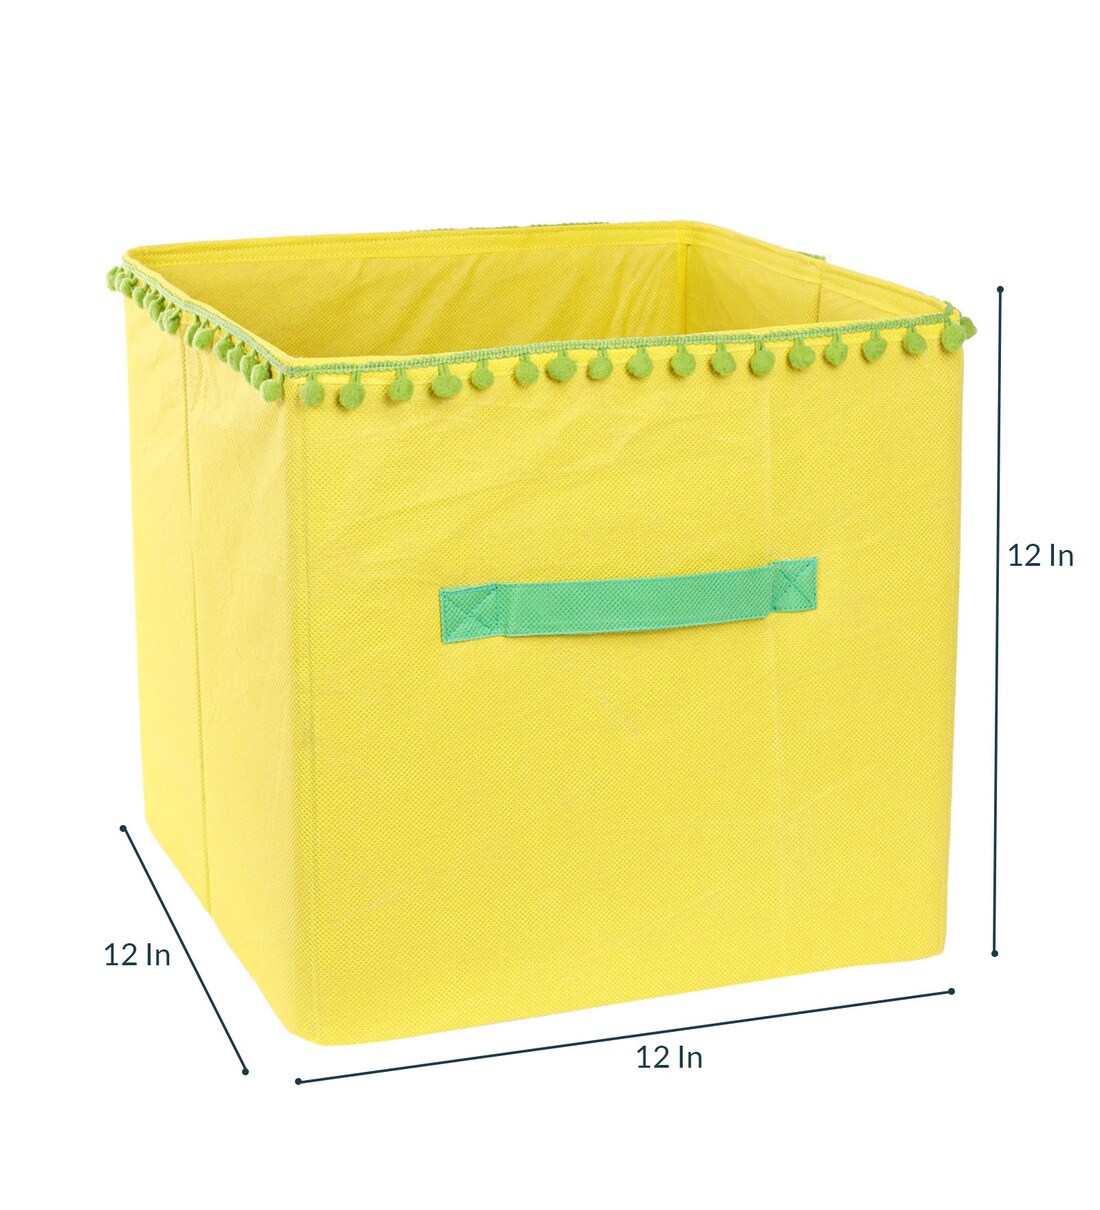 Chuck Fabric Kids Storage Box in Yellow Colour